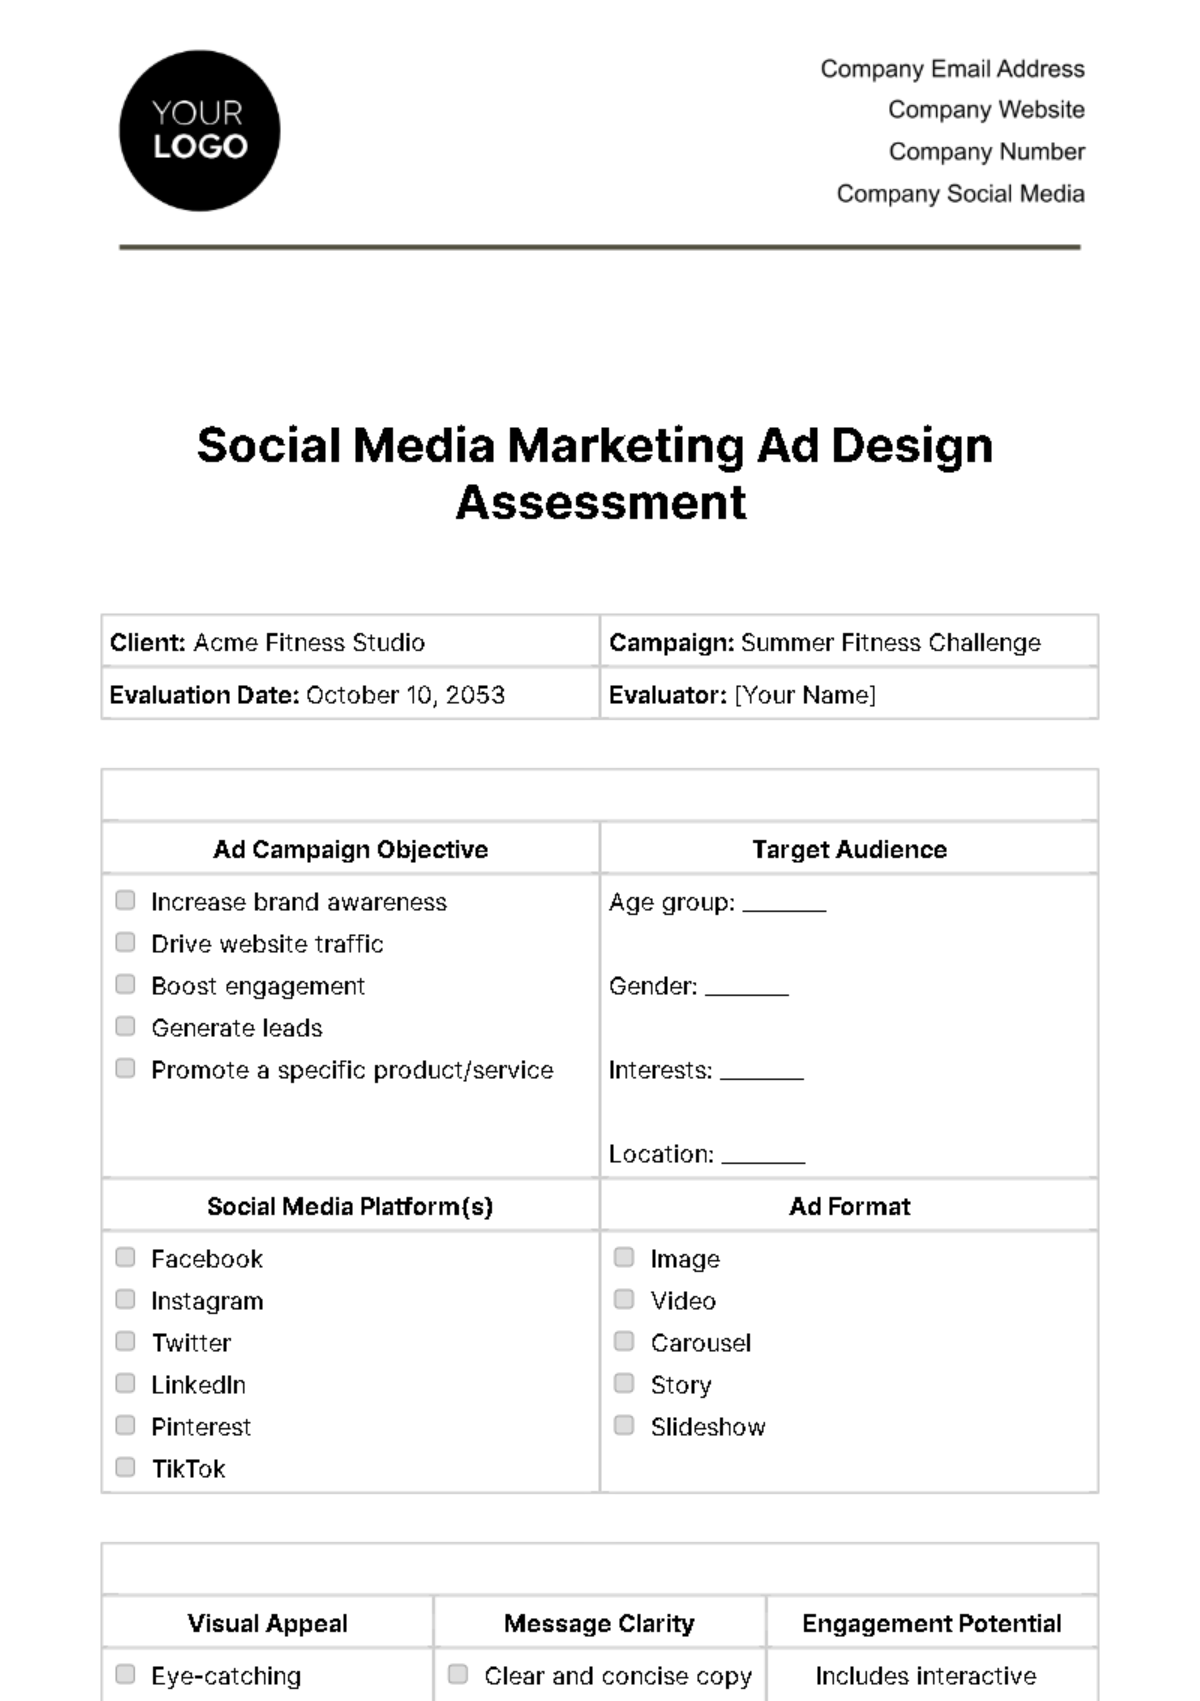 Social Media Marketing Ad Design Assessment Template